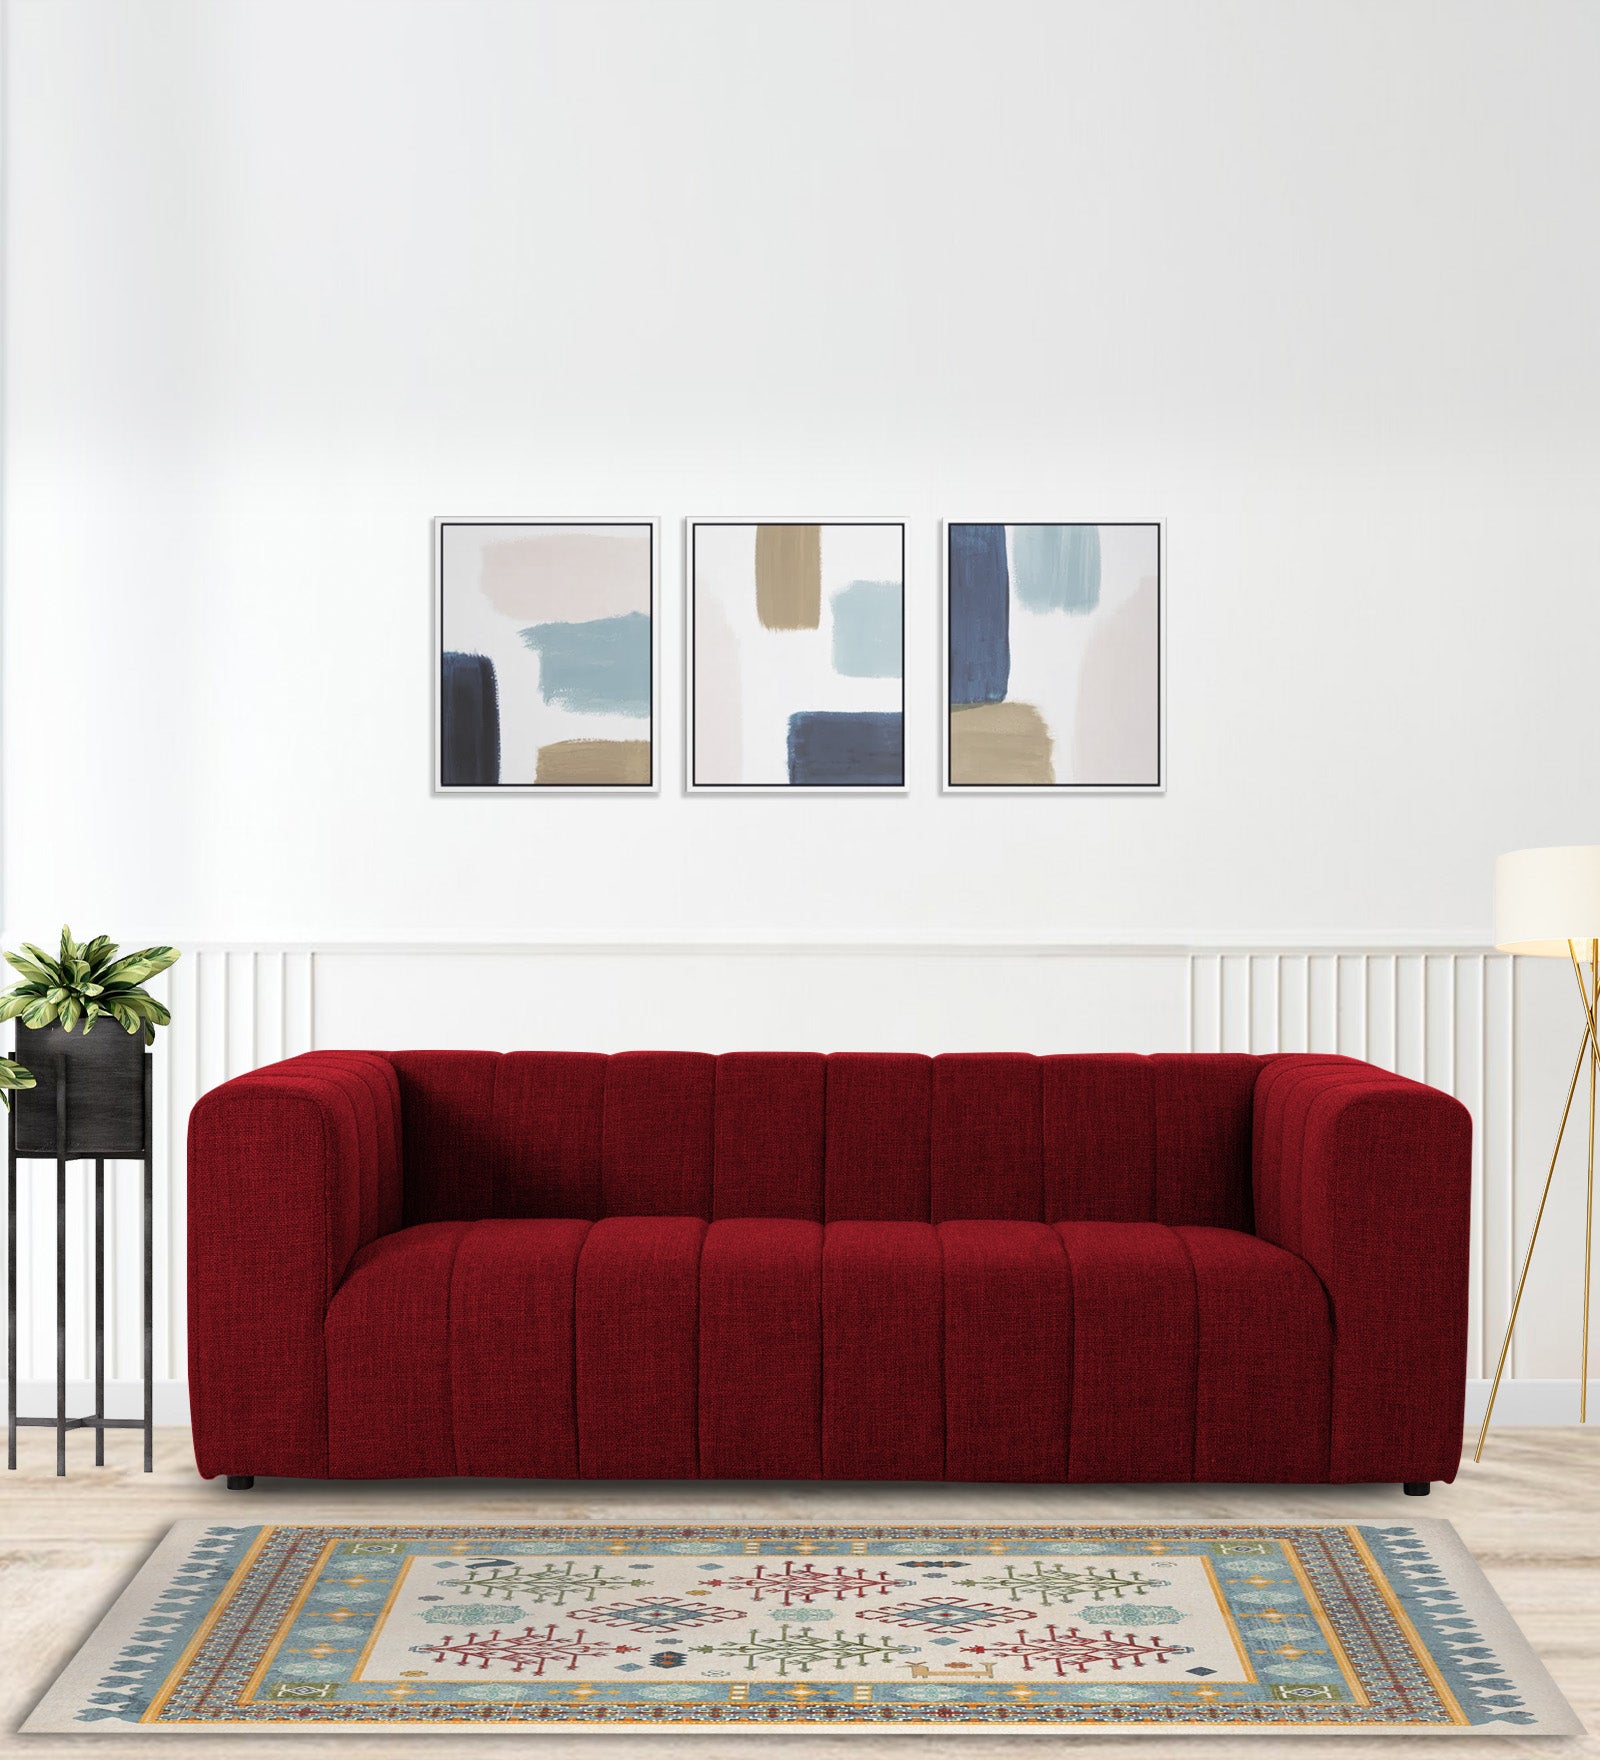 Lara Fabric 3 Seater Sofa in Blood Maroon Colour